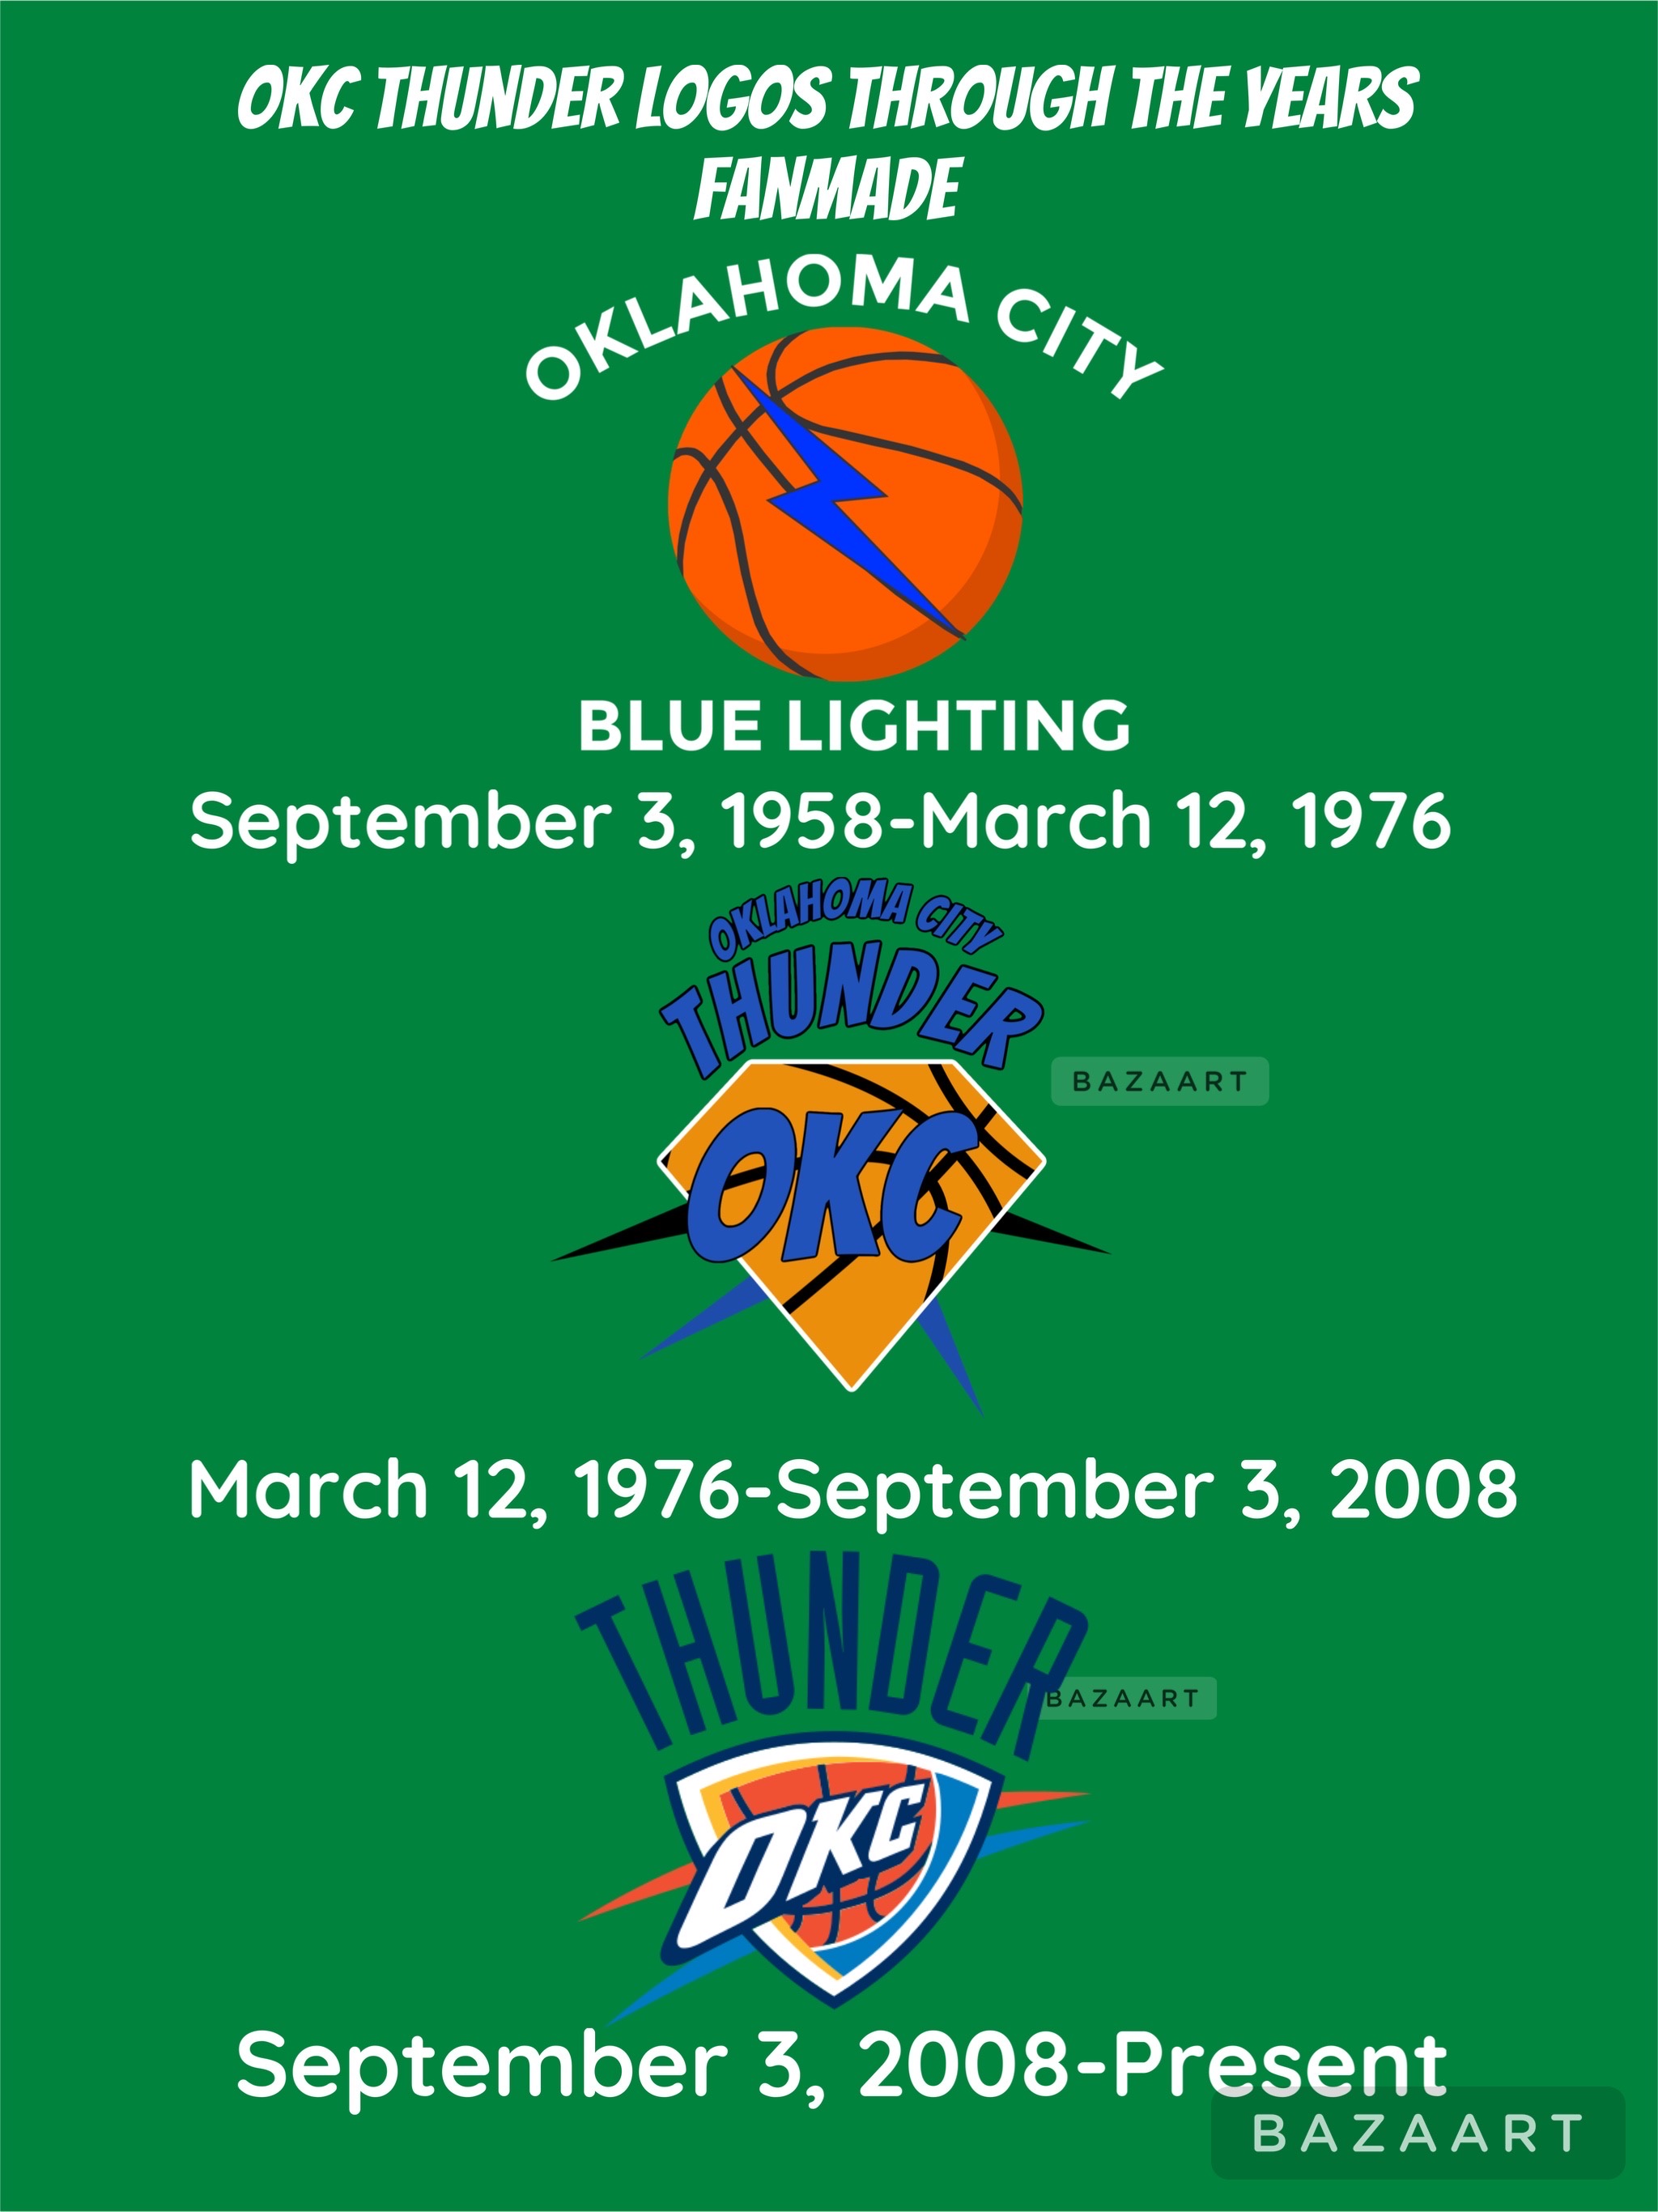 Oklahoma City Thunder NBA Basketball Official Team Logo and